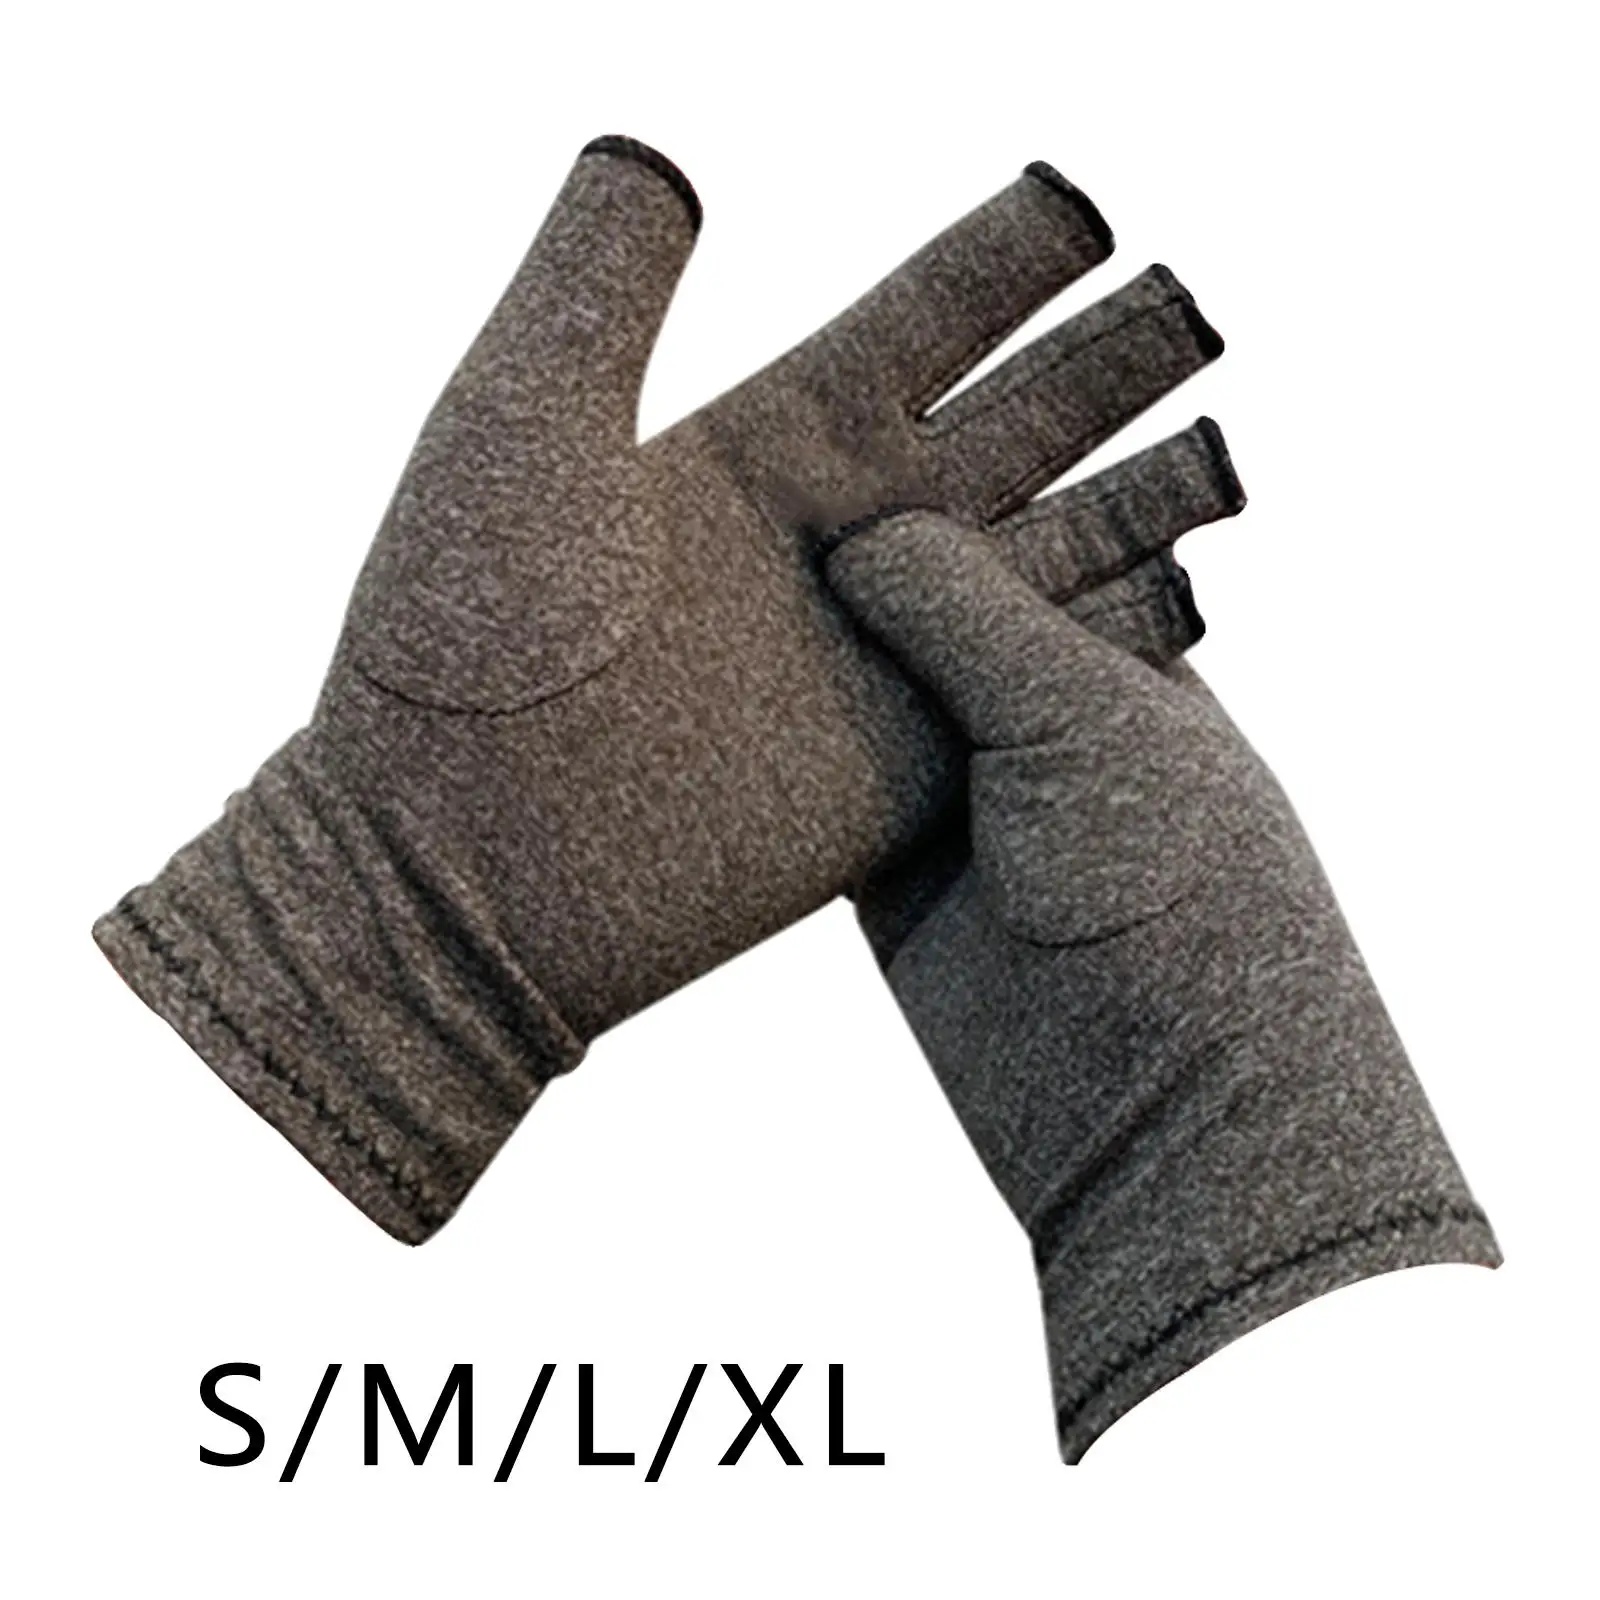 Fingerless Arthritis Compression Gloves Half Finger Support Arthritis Gloves for Fitness Cycling Training Women and Men